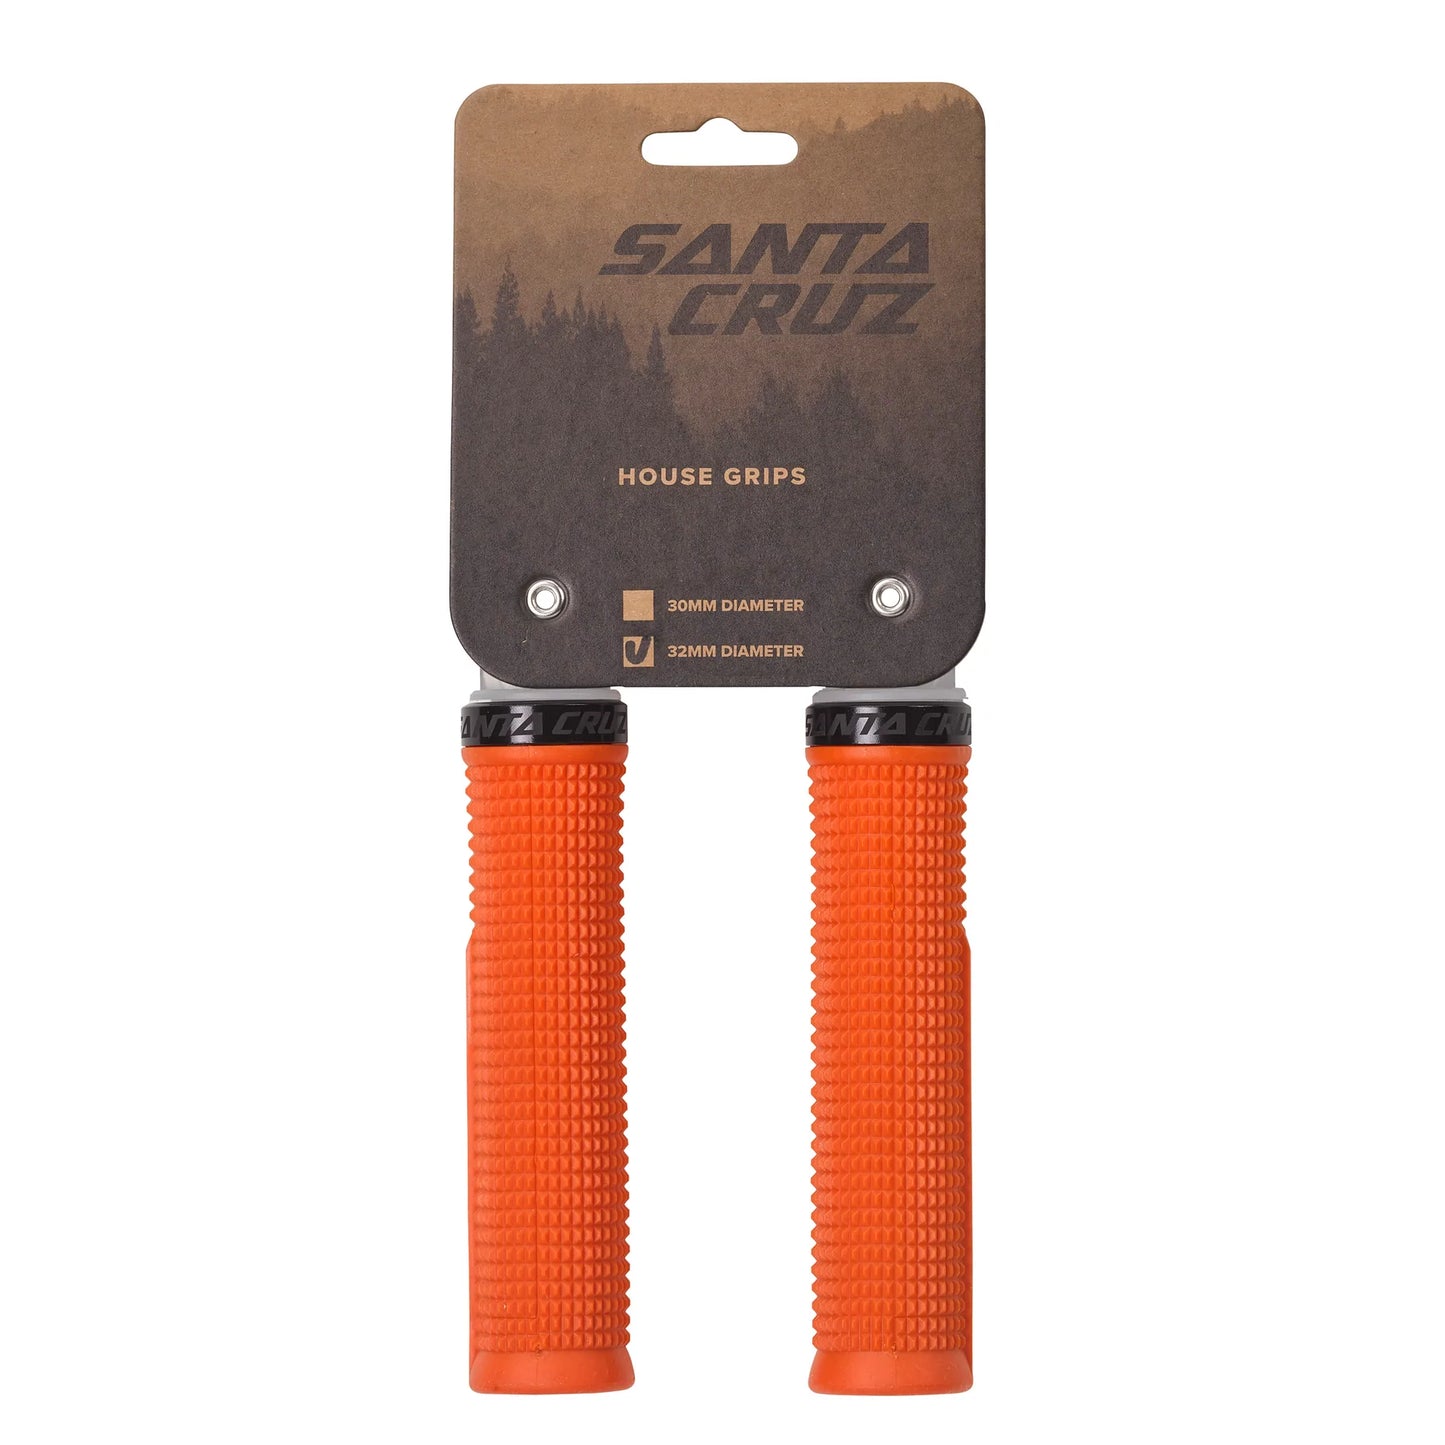 Santa Cruz House Grips - 32mm - Orange Orange  